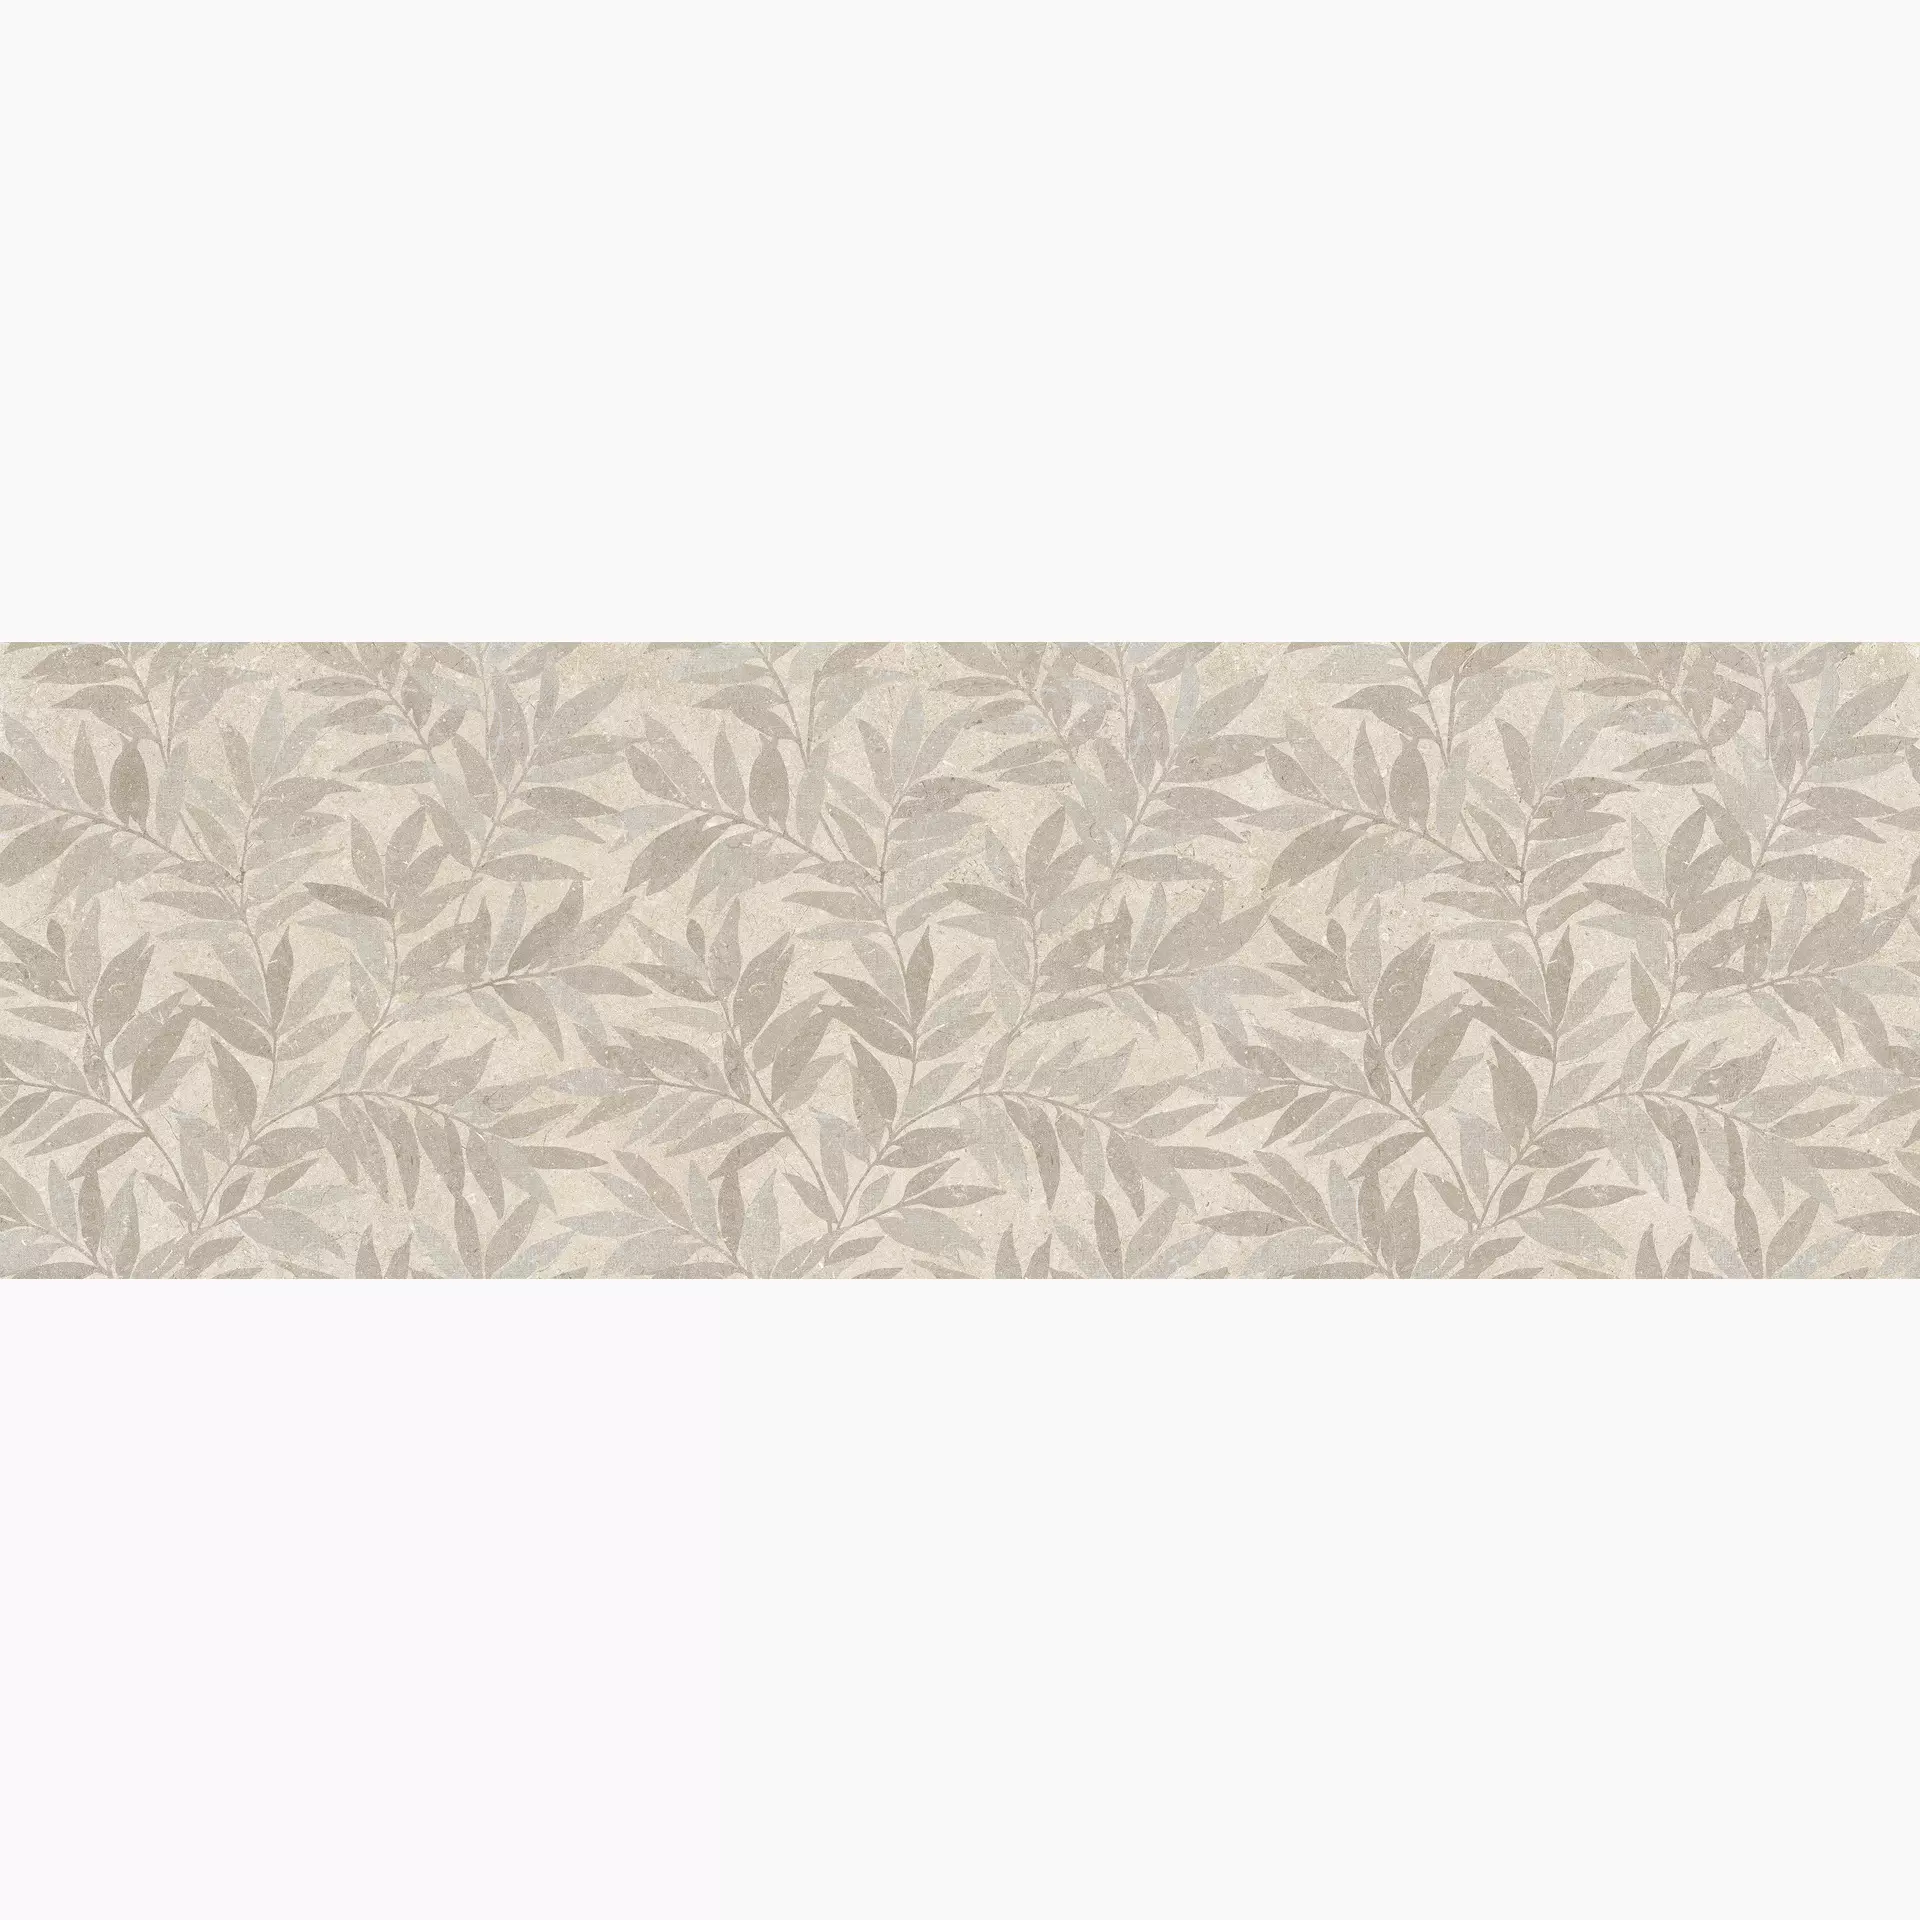 Wandfliese Marazzi Limestone Wall Sand – Taupe Touch Sand – Taupe MFDT touch 40x120cm Dekor Agrifolgio rektifiziert 6mm